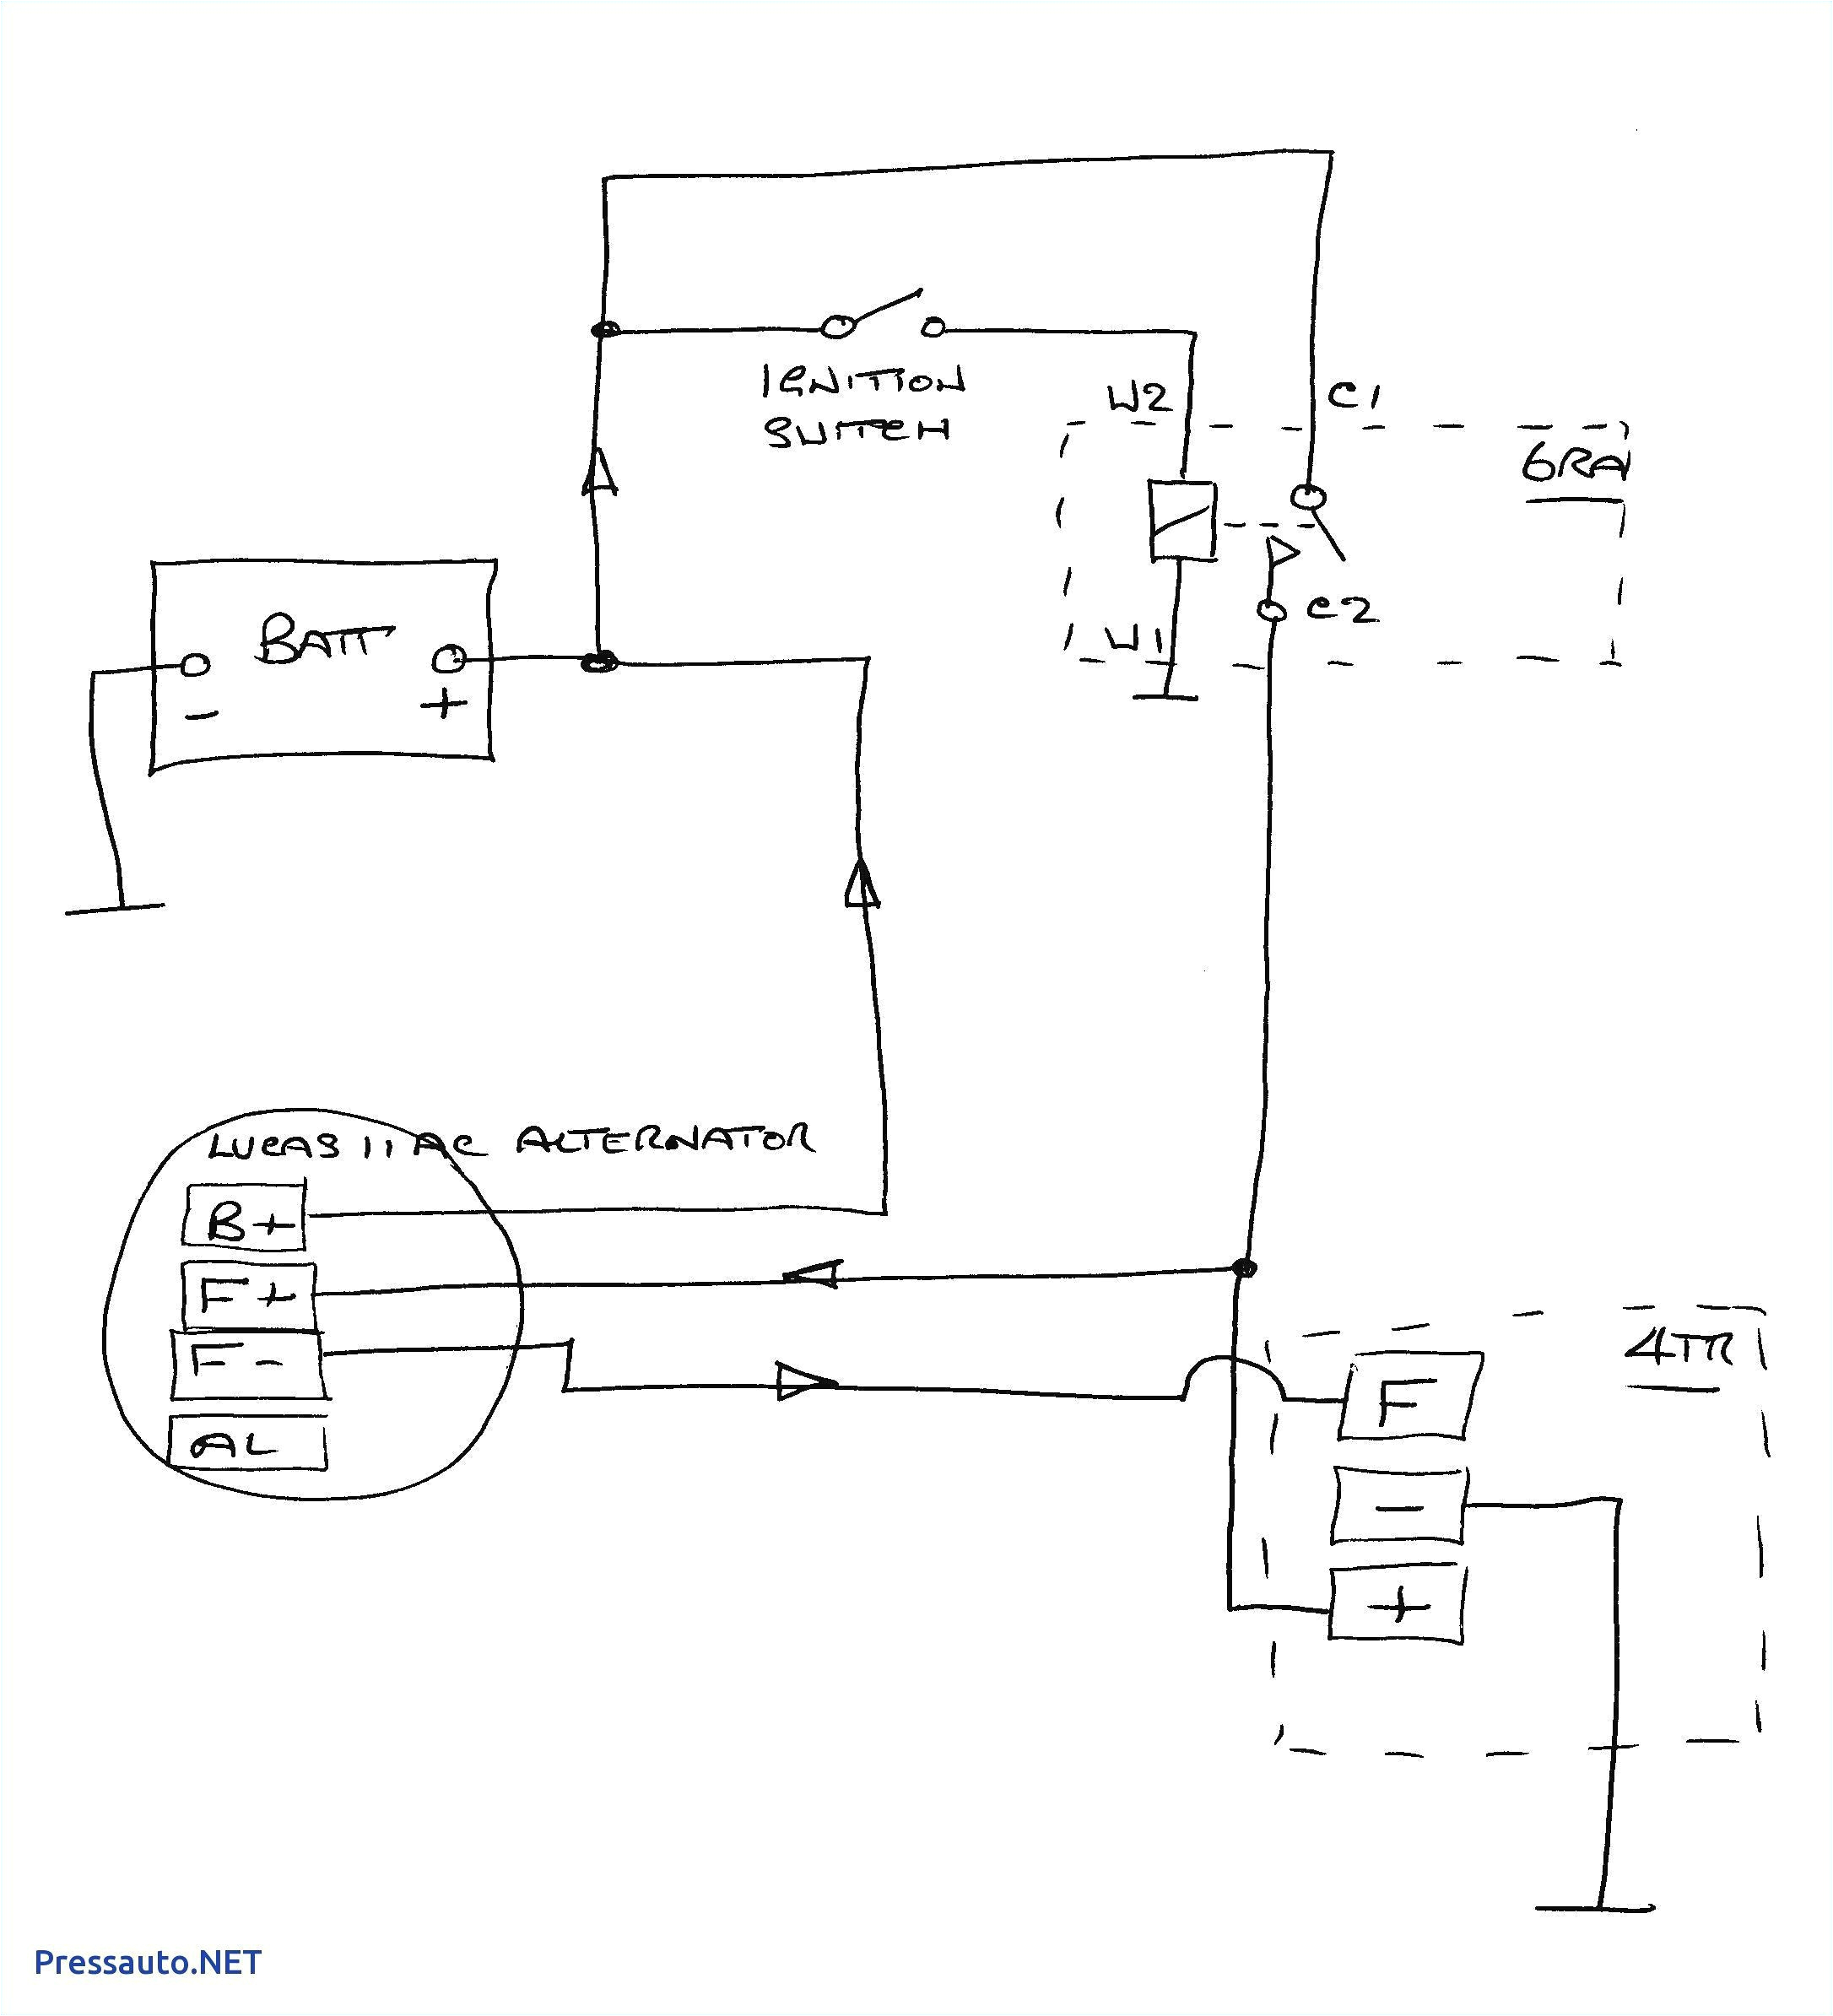 cessna alternator wiring diagram wiring diagram view 1967 cessna 150 wiring diagram